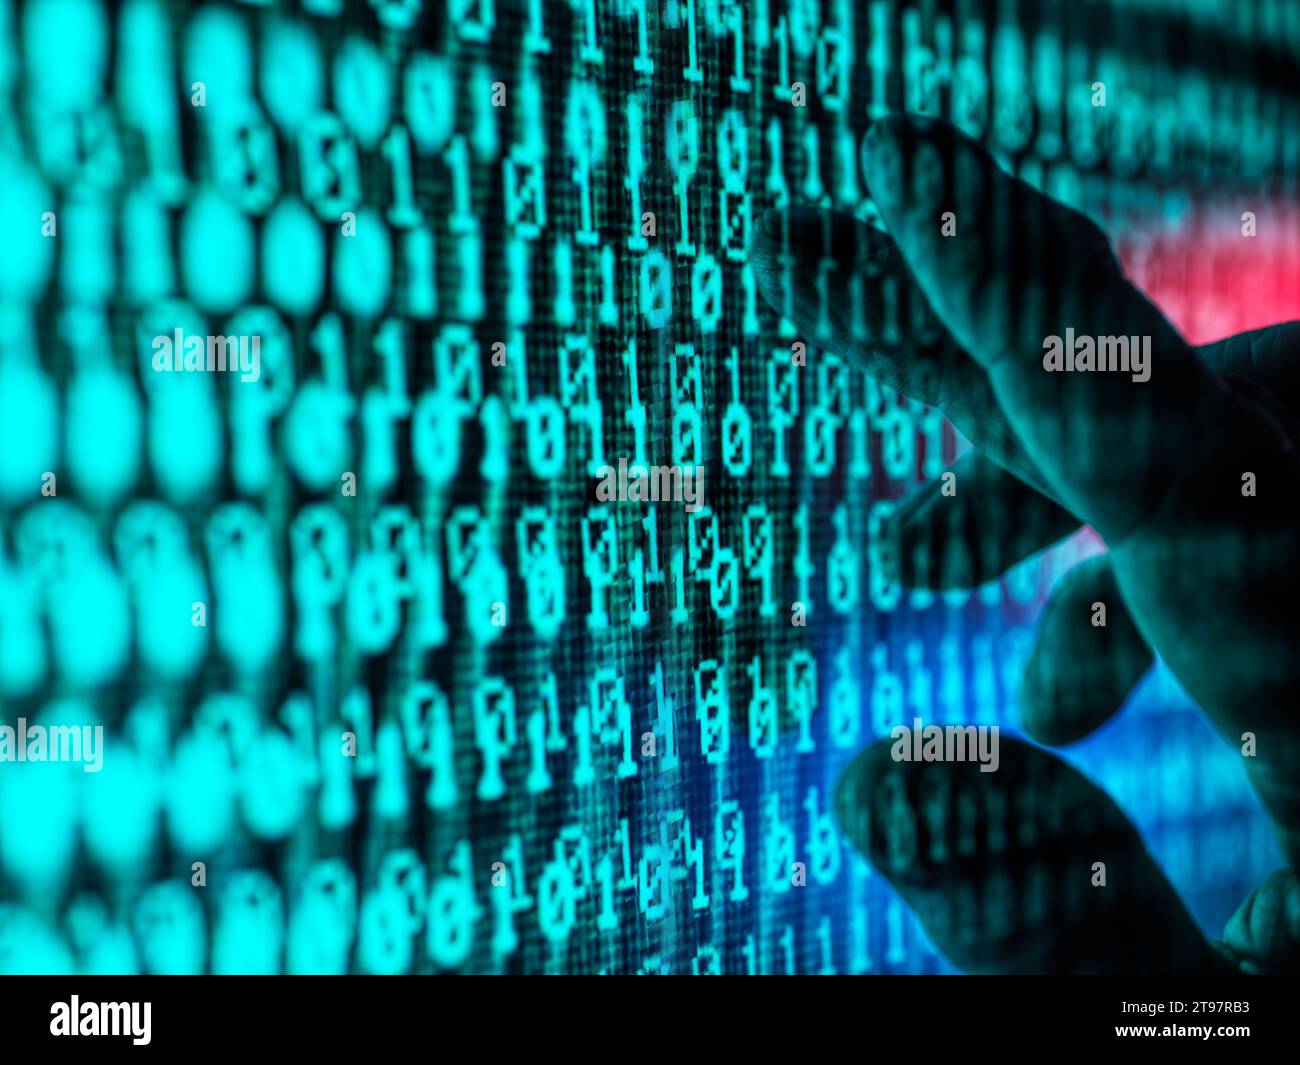 Hand of man touching screen displaying binary code Stock Photo